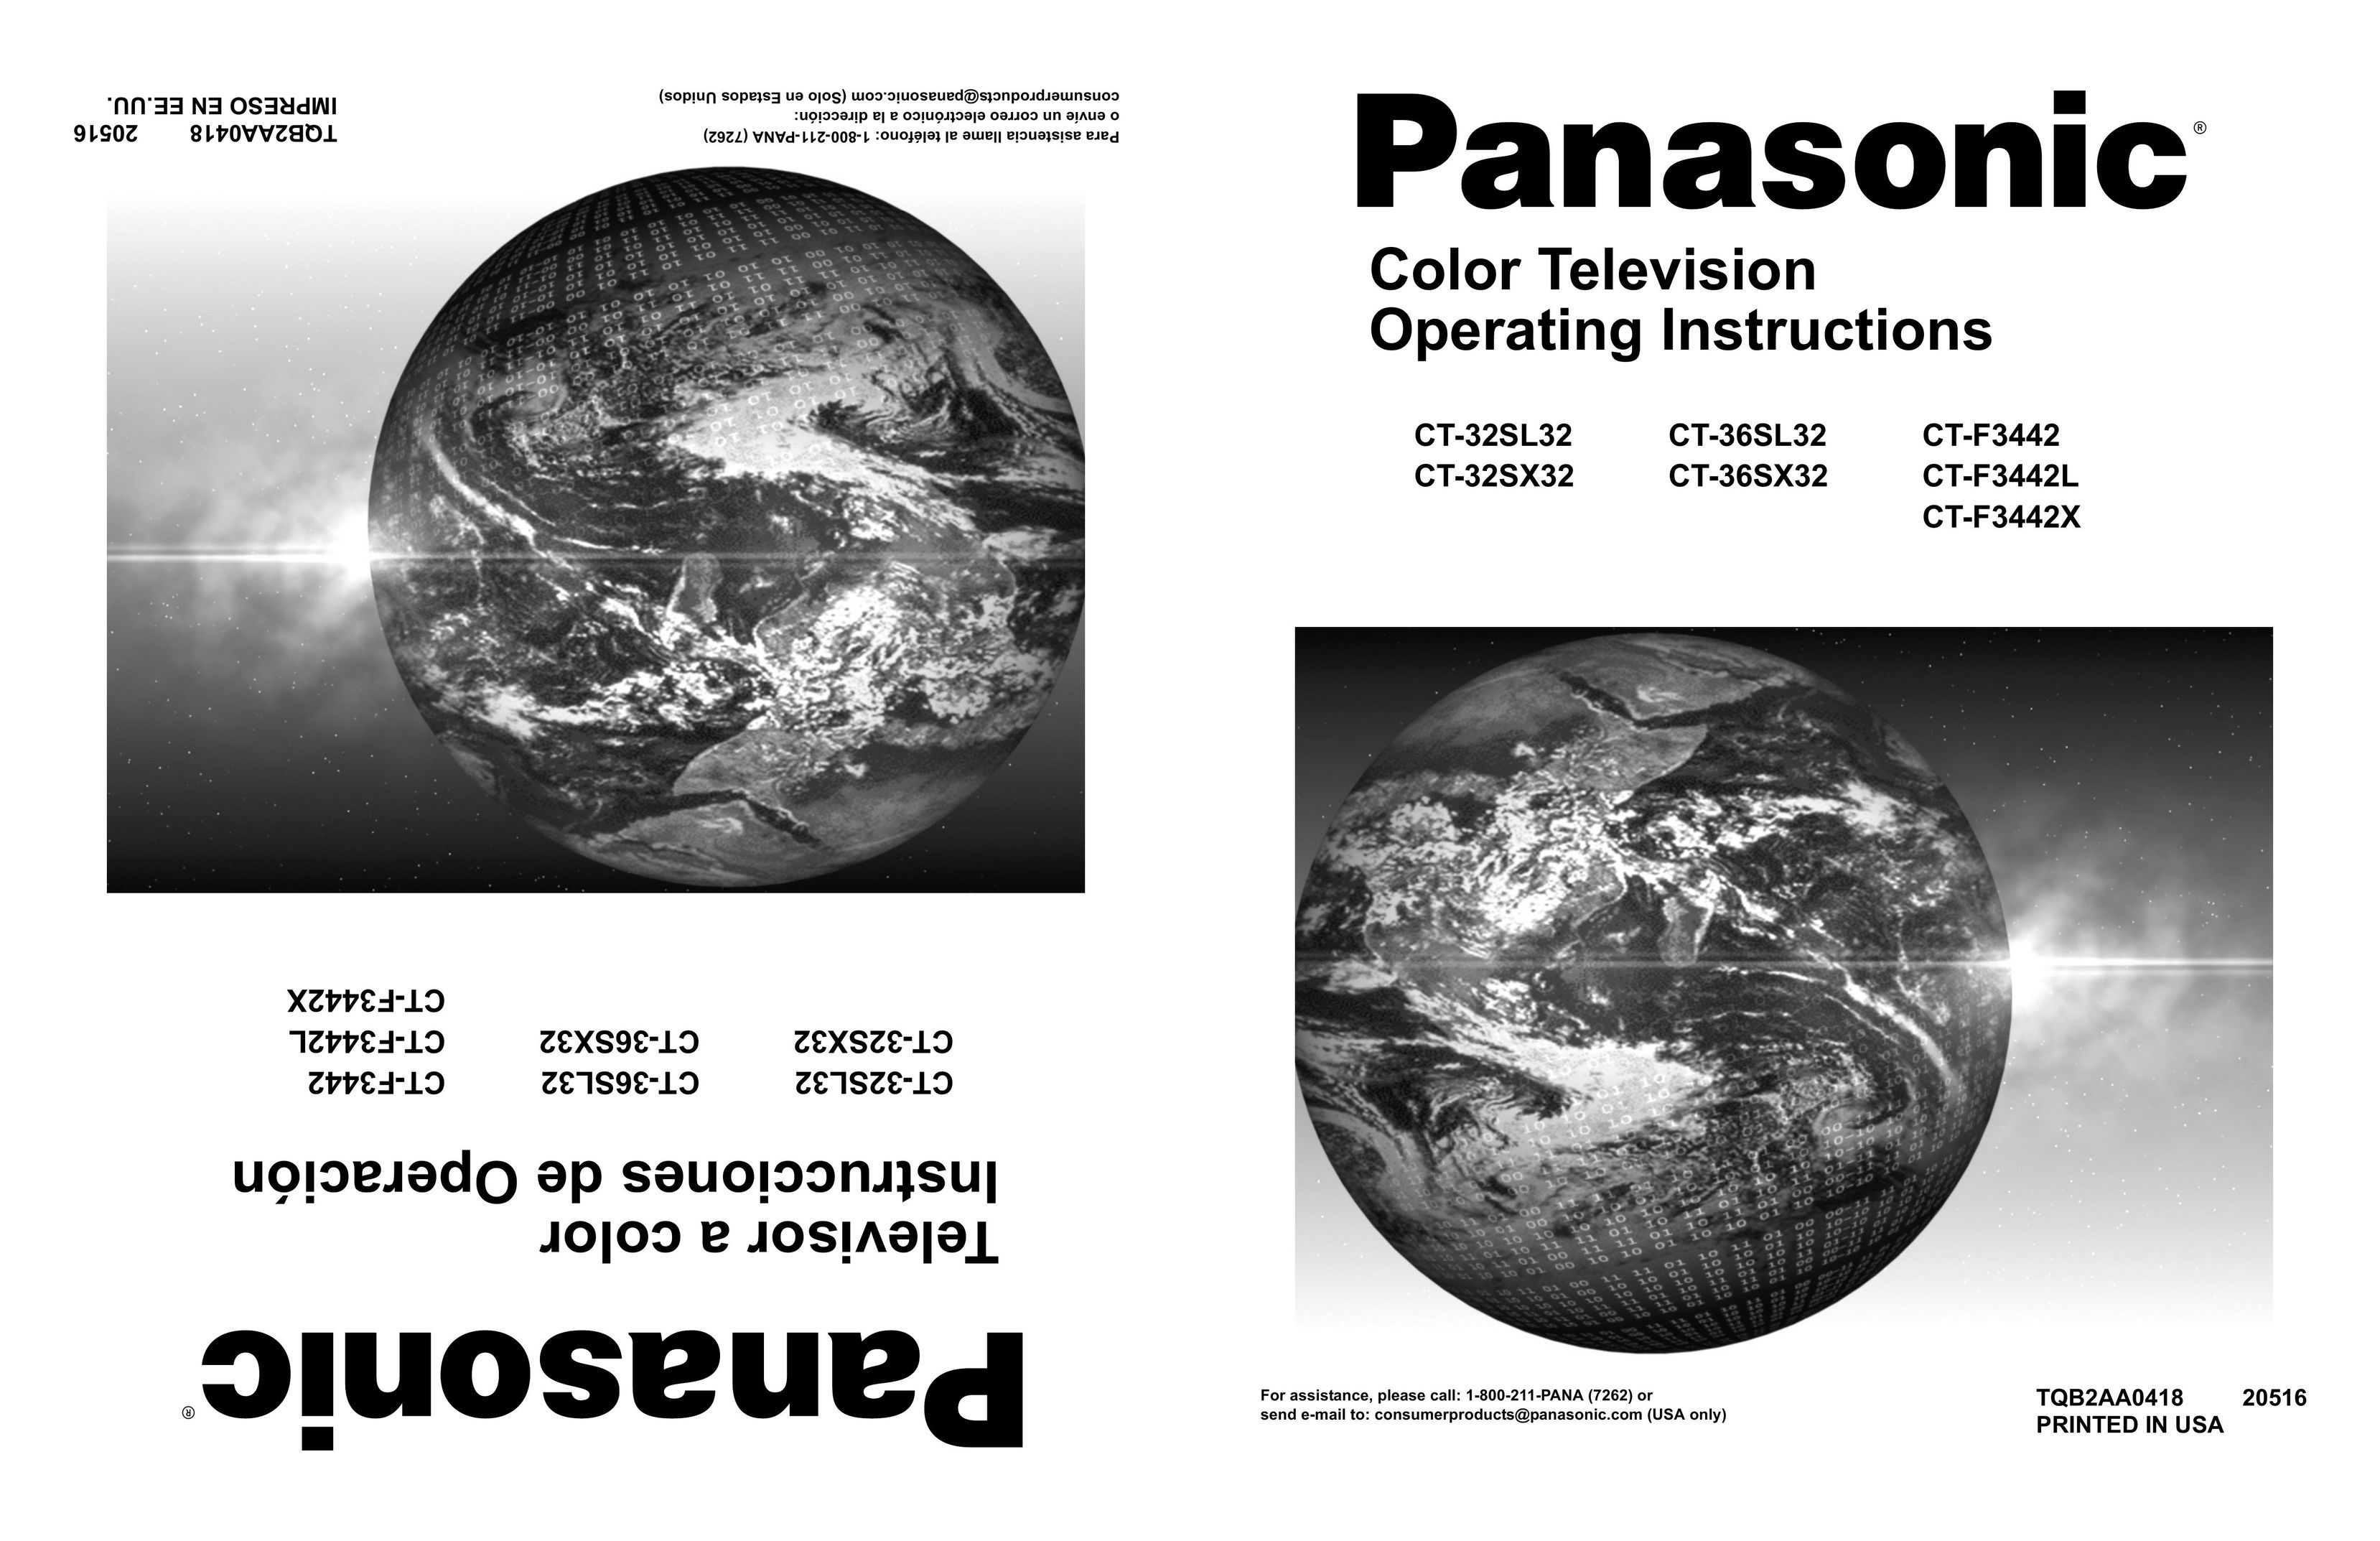 Panasonic CT-F3442X Flat Panel Television User Manual